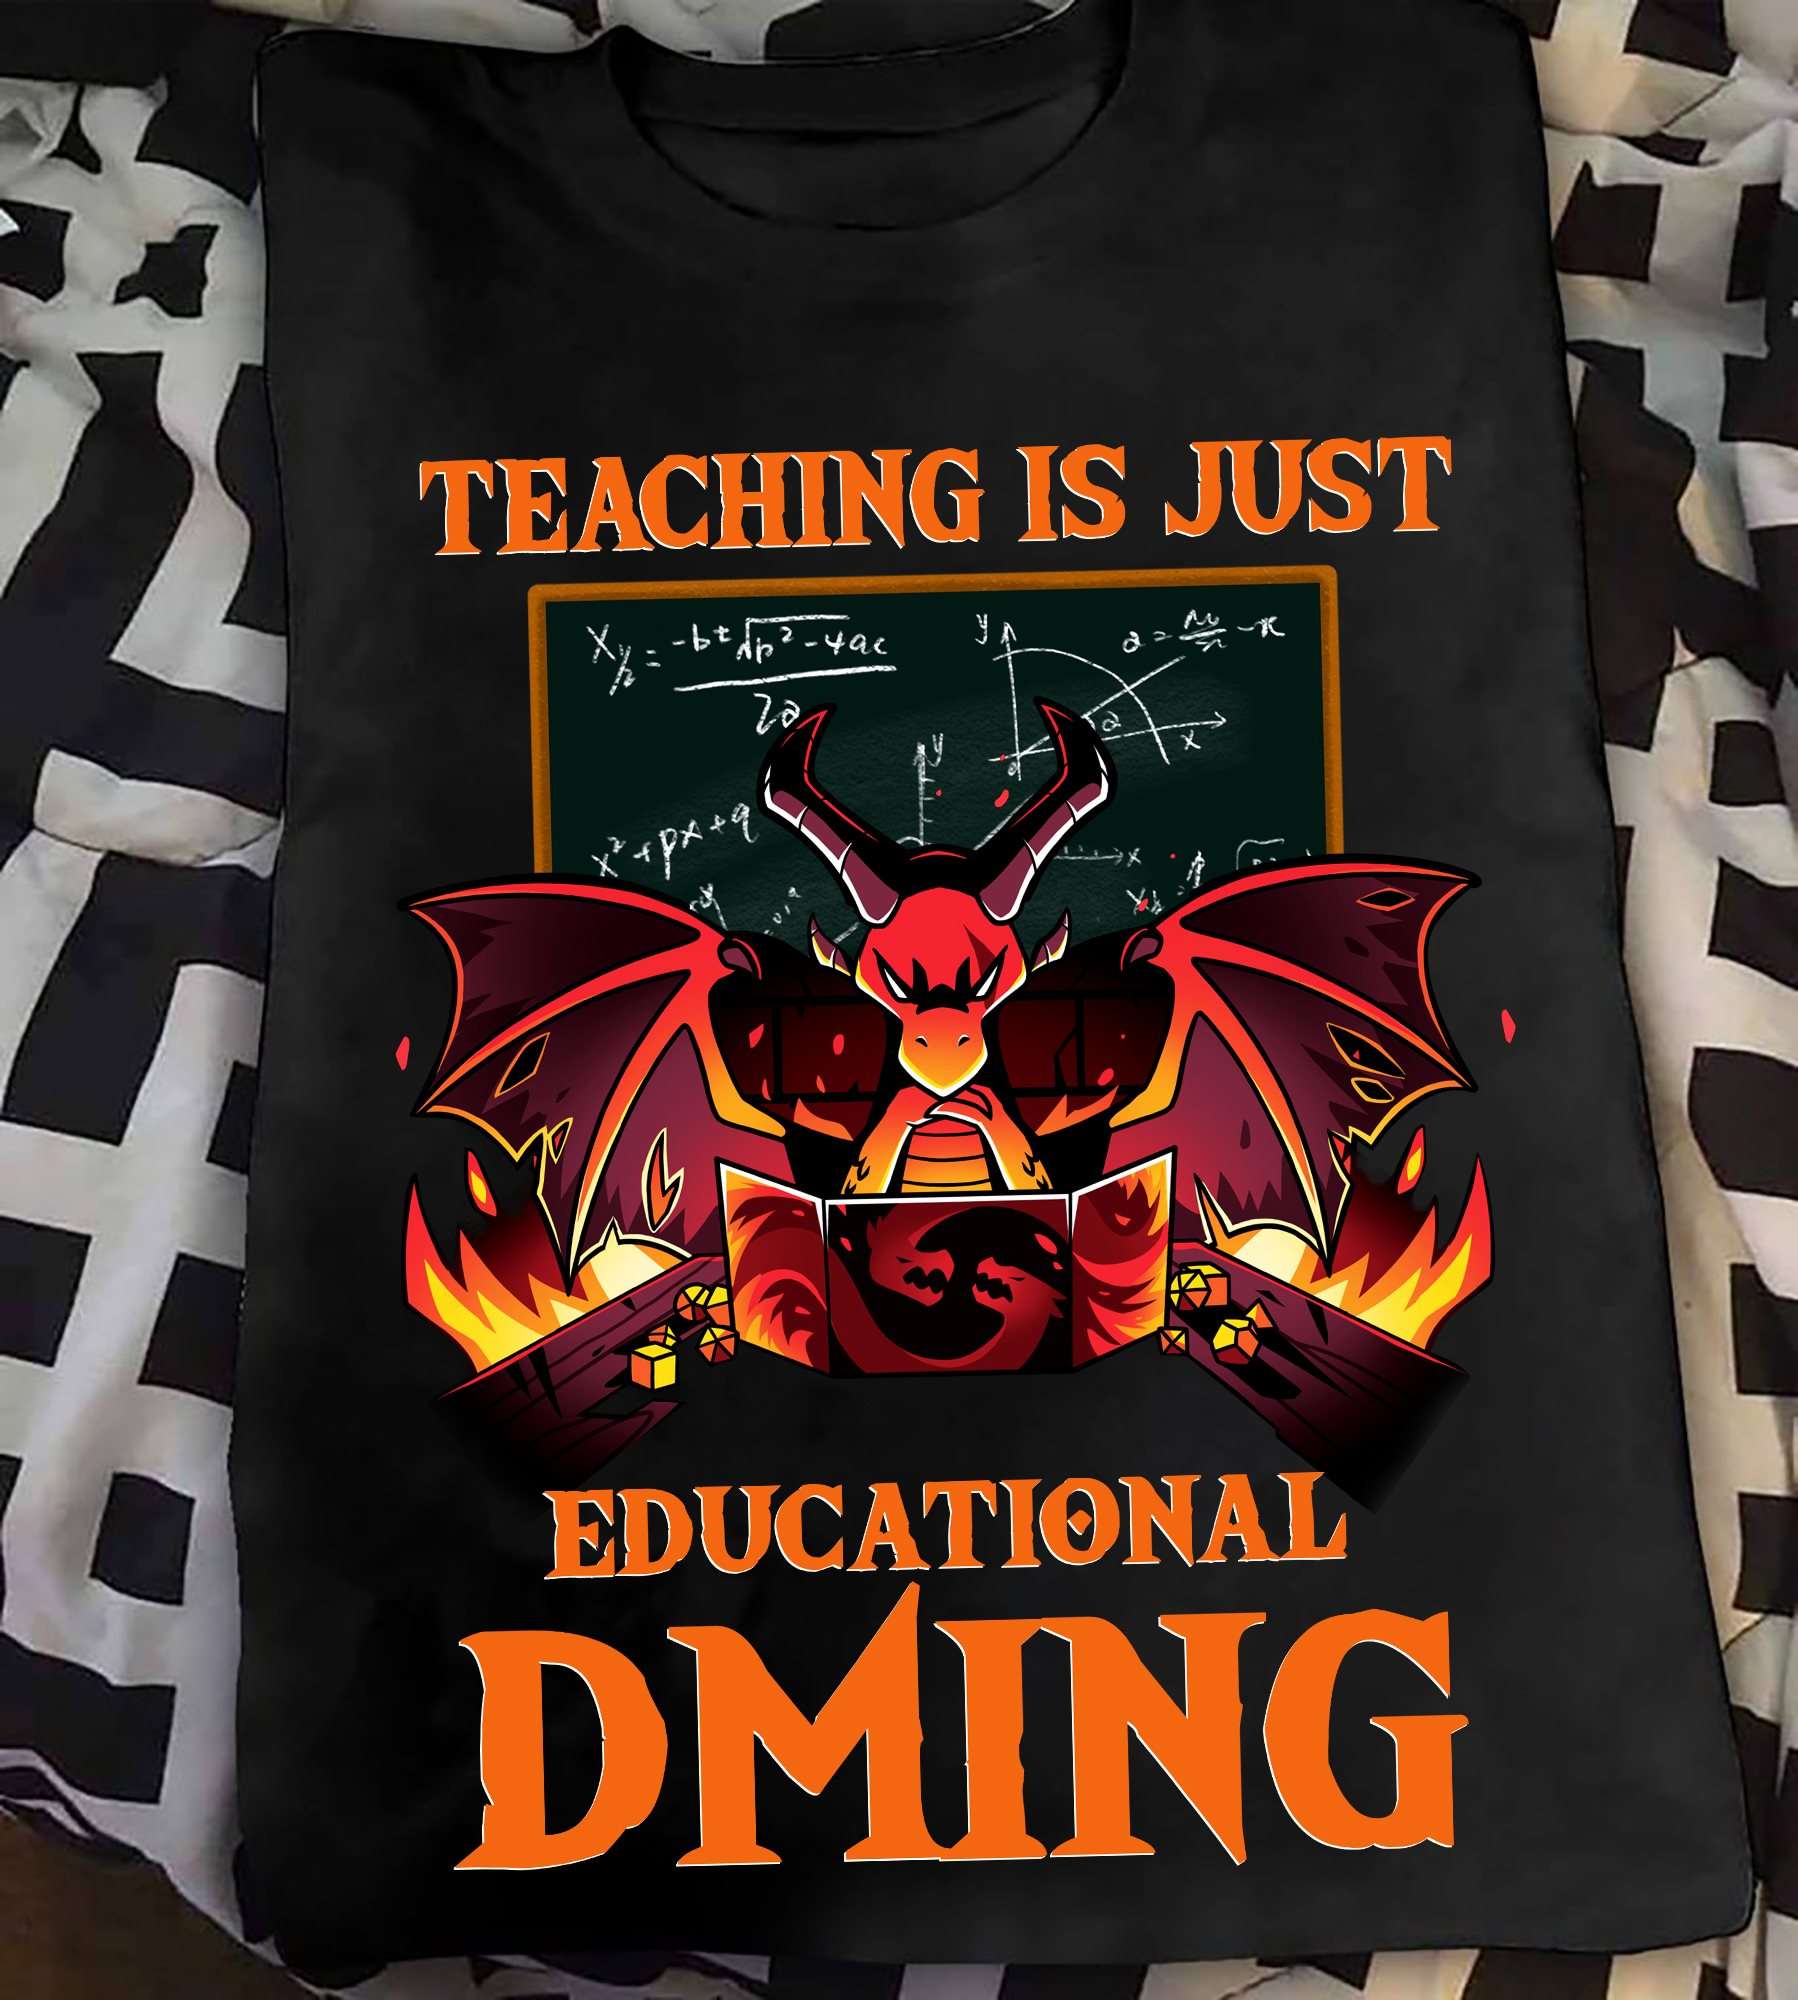 Teaching is just educational dming - Flame dragon teaching, teacher educational job